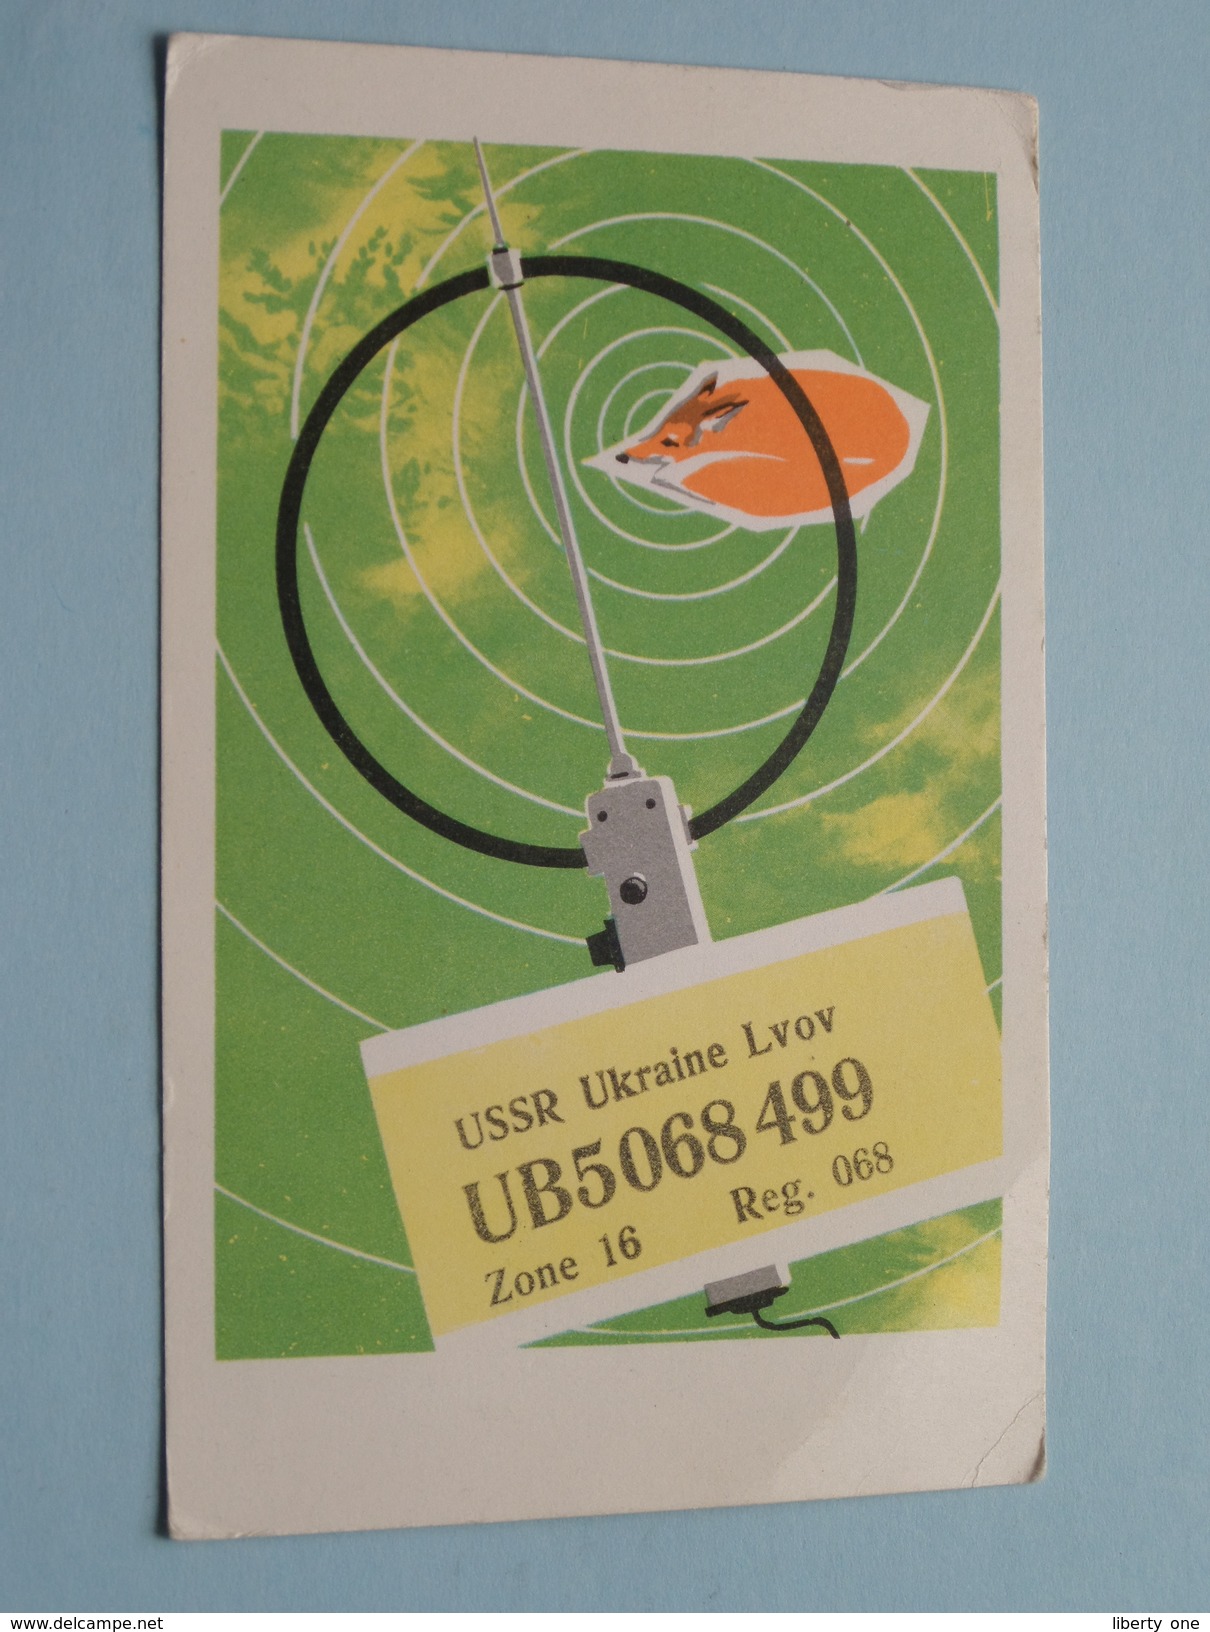 USSR Ukraine Lvov UB5068499 Zone 16 - Reg. 068 > FM7AV - 1981 ( Zie Foto Voor Details ) - Amateurfunk